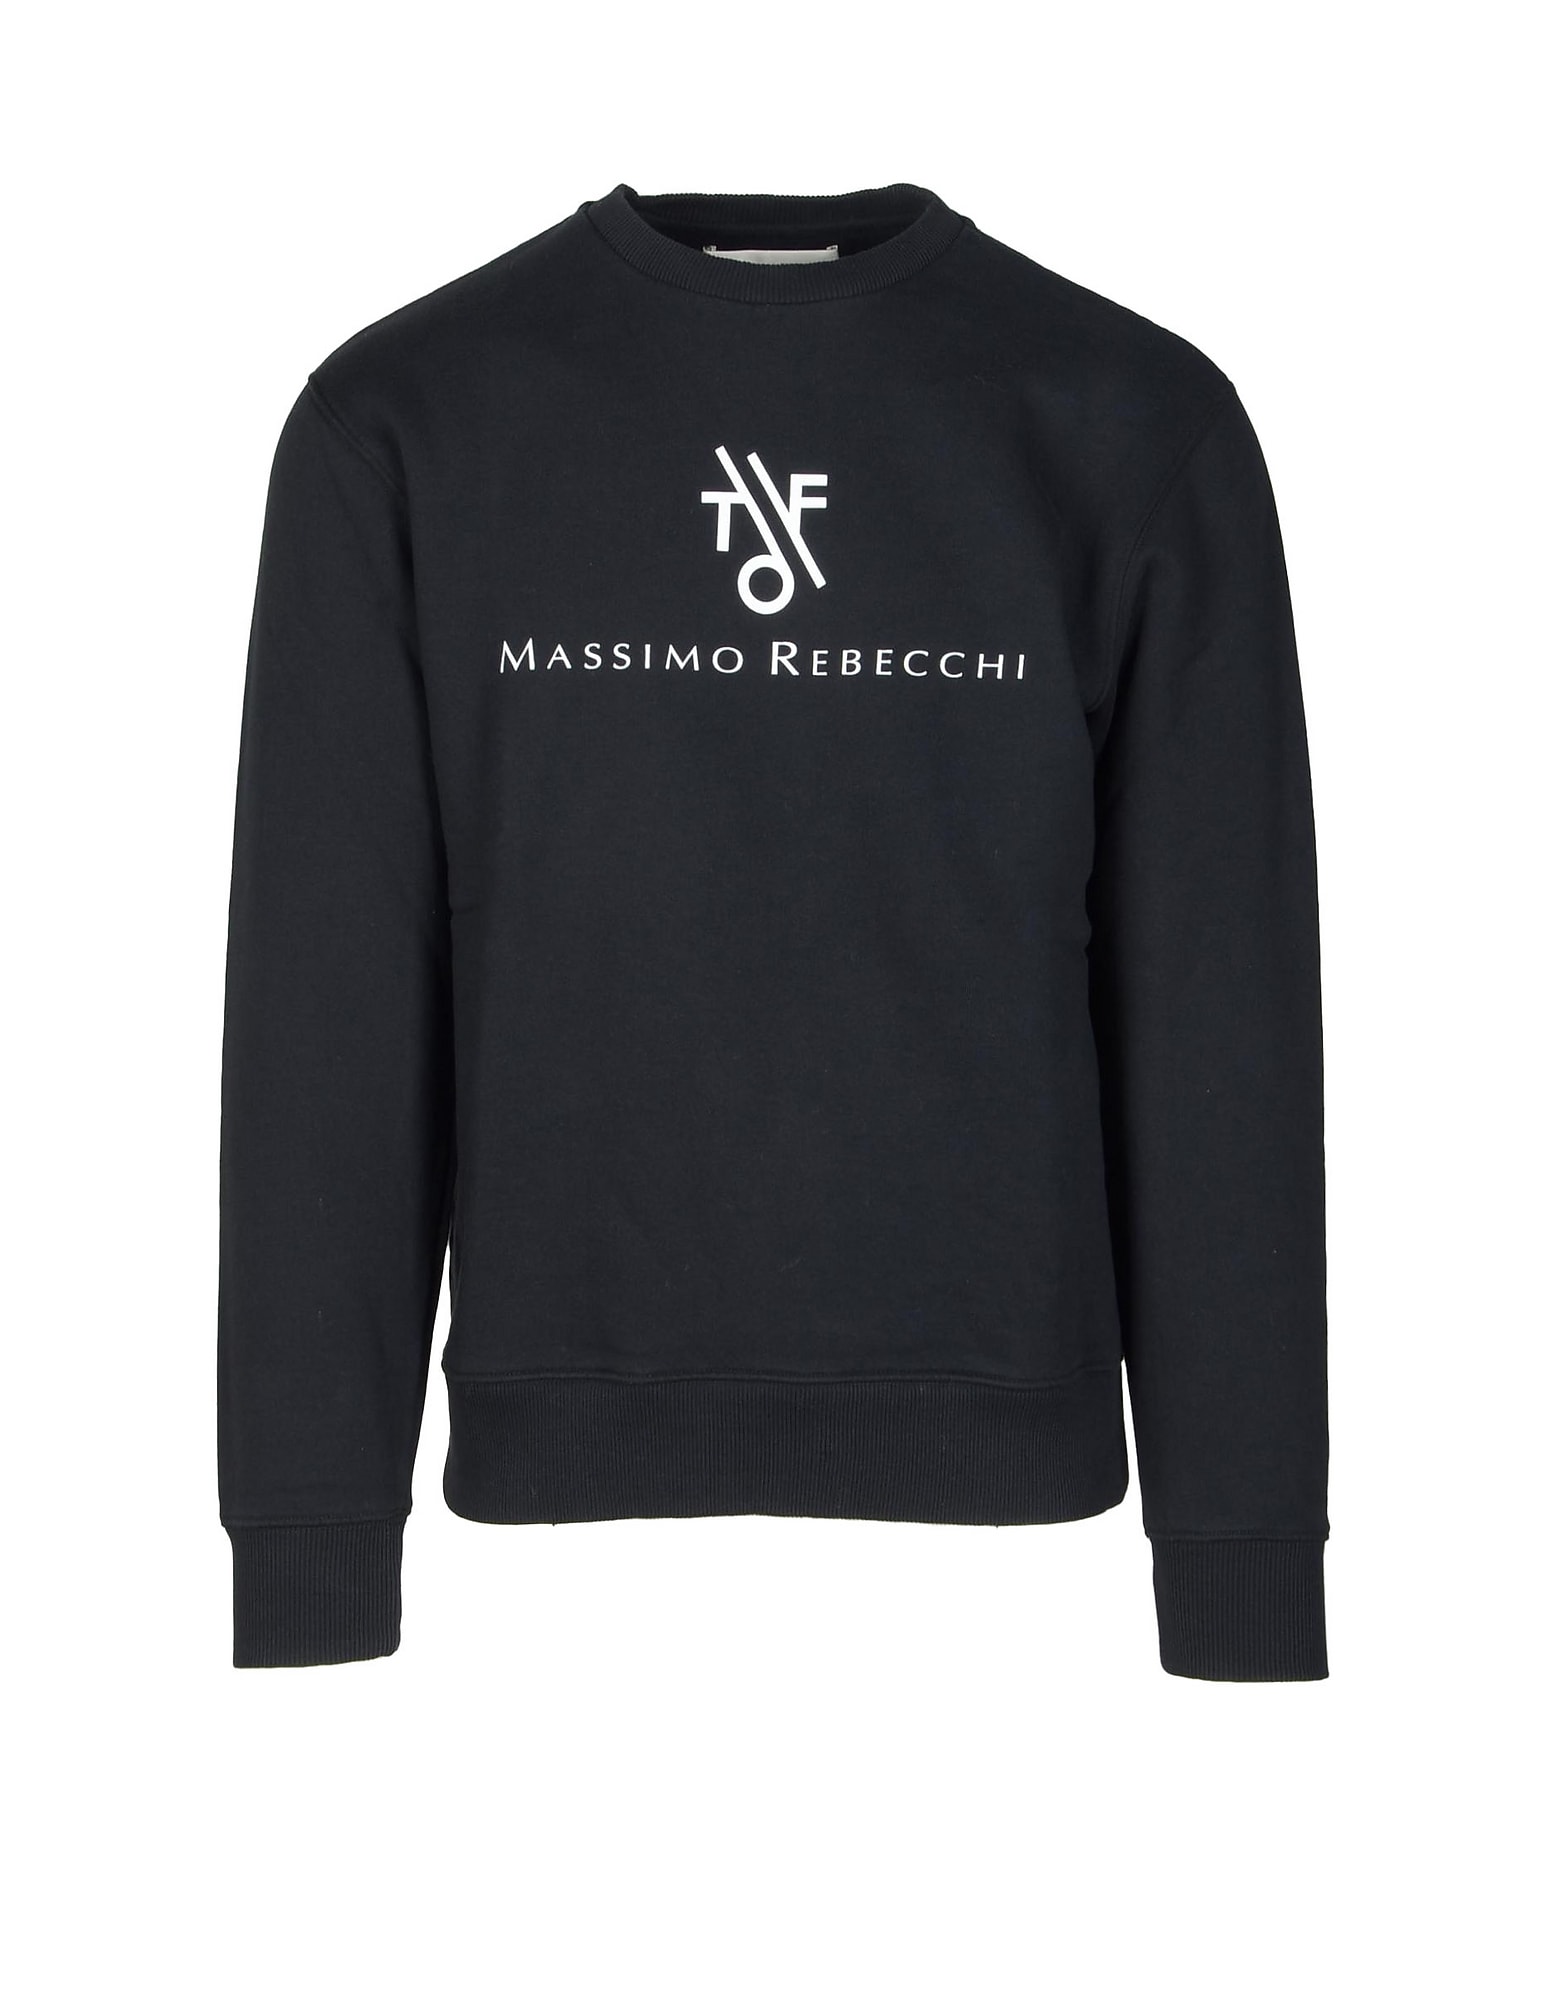 Massimo Rebecchi Mens Black Sweatshirt